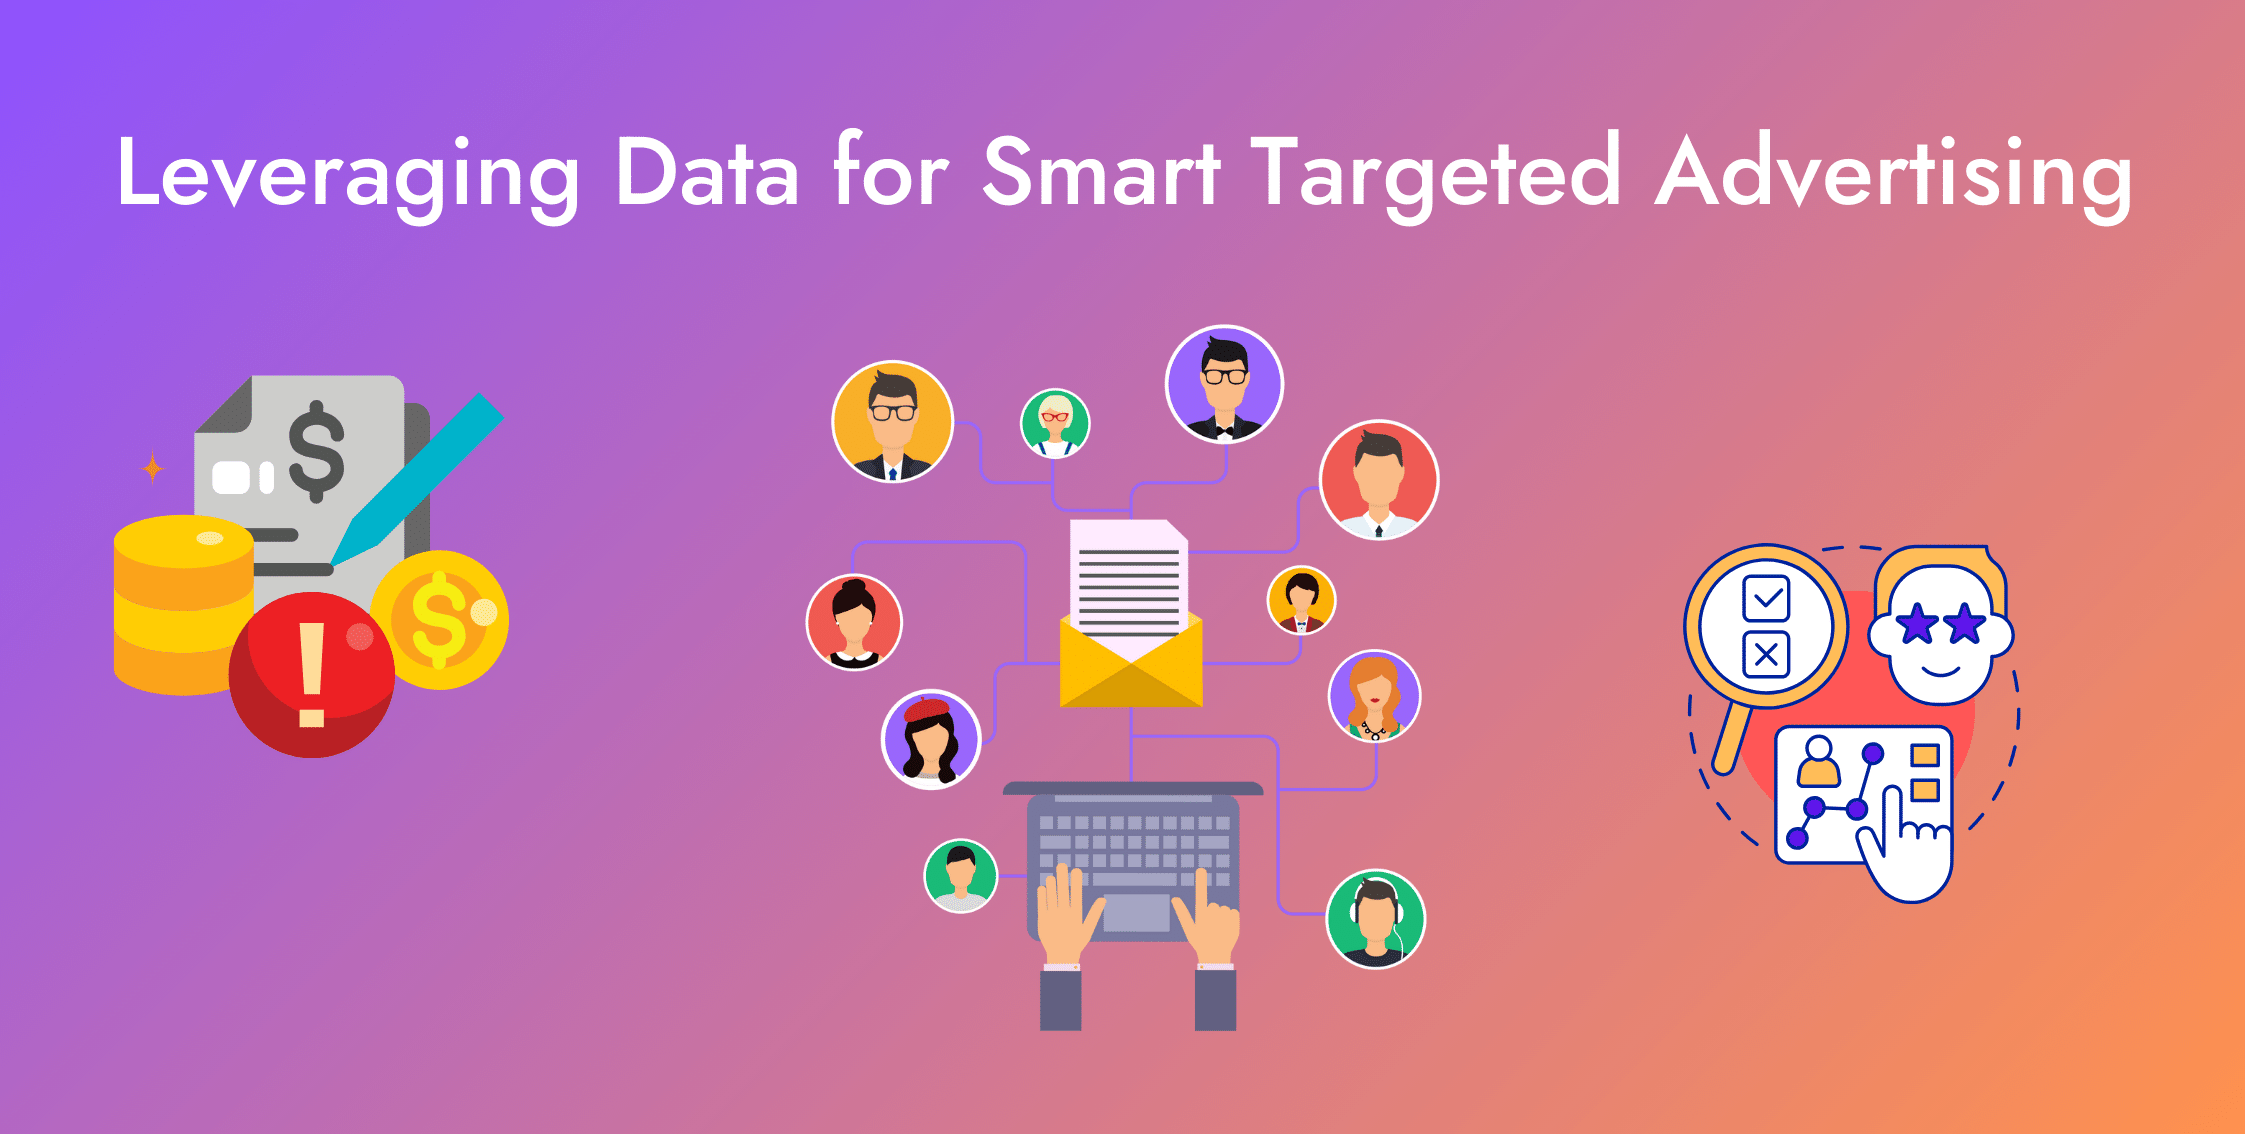 Smart Targeting in Digital Advertising by Leveraging Data